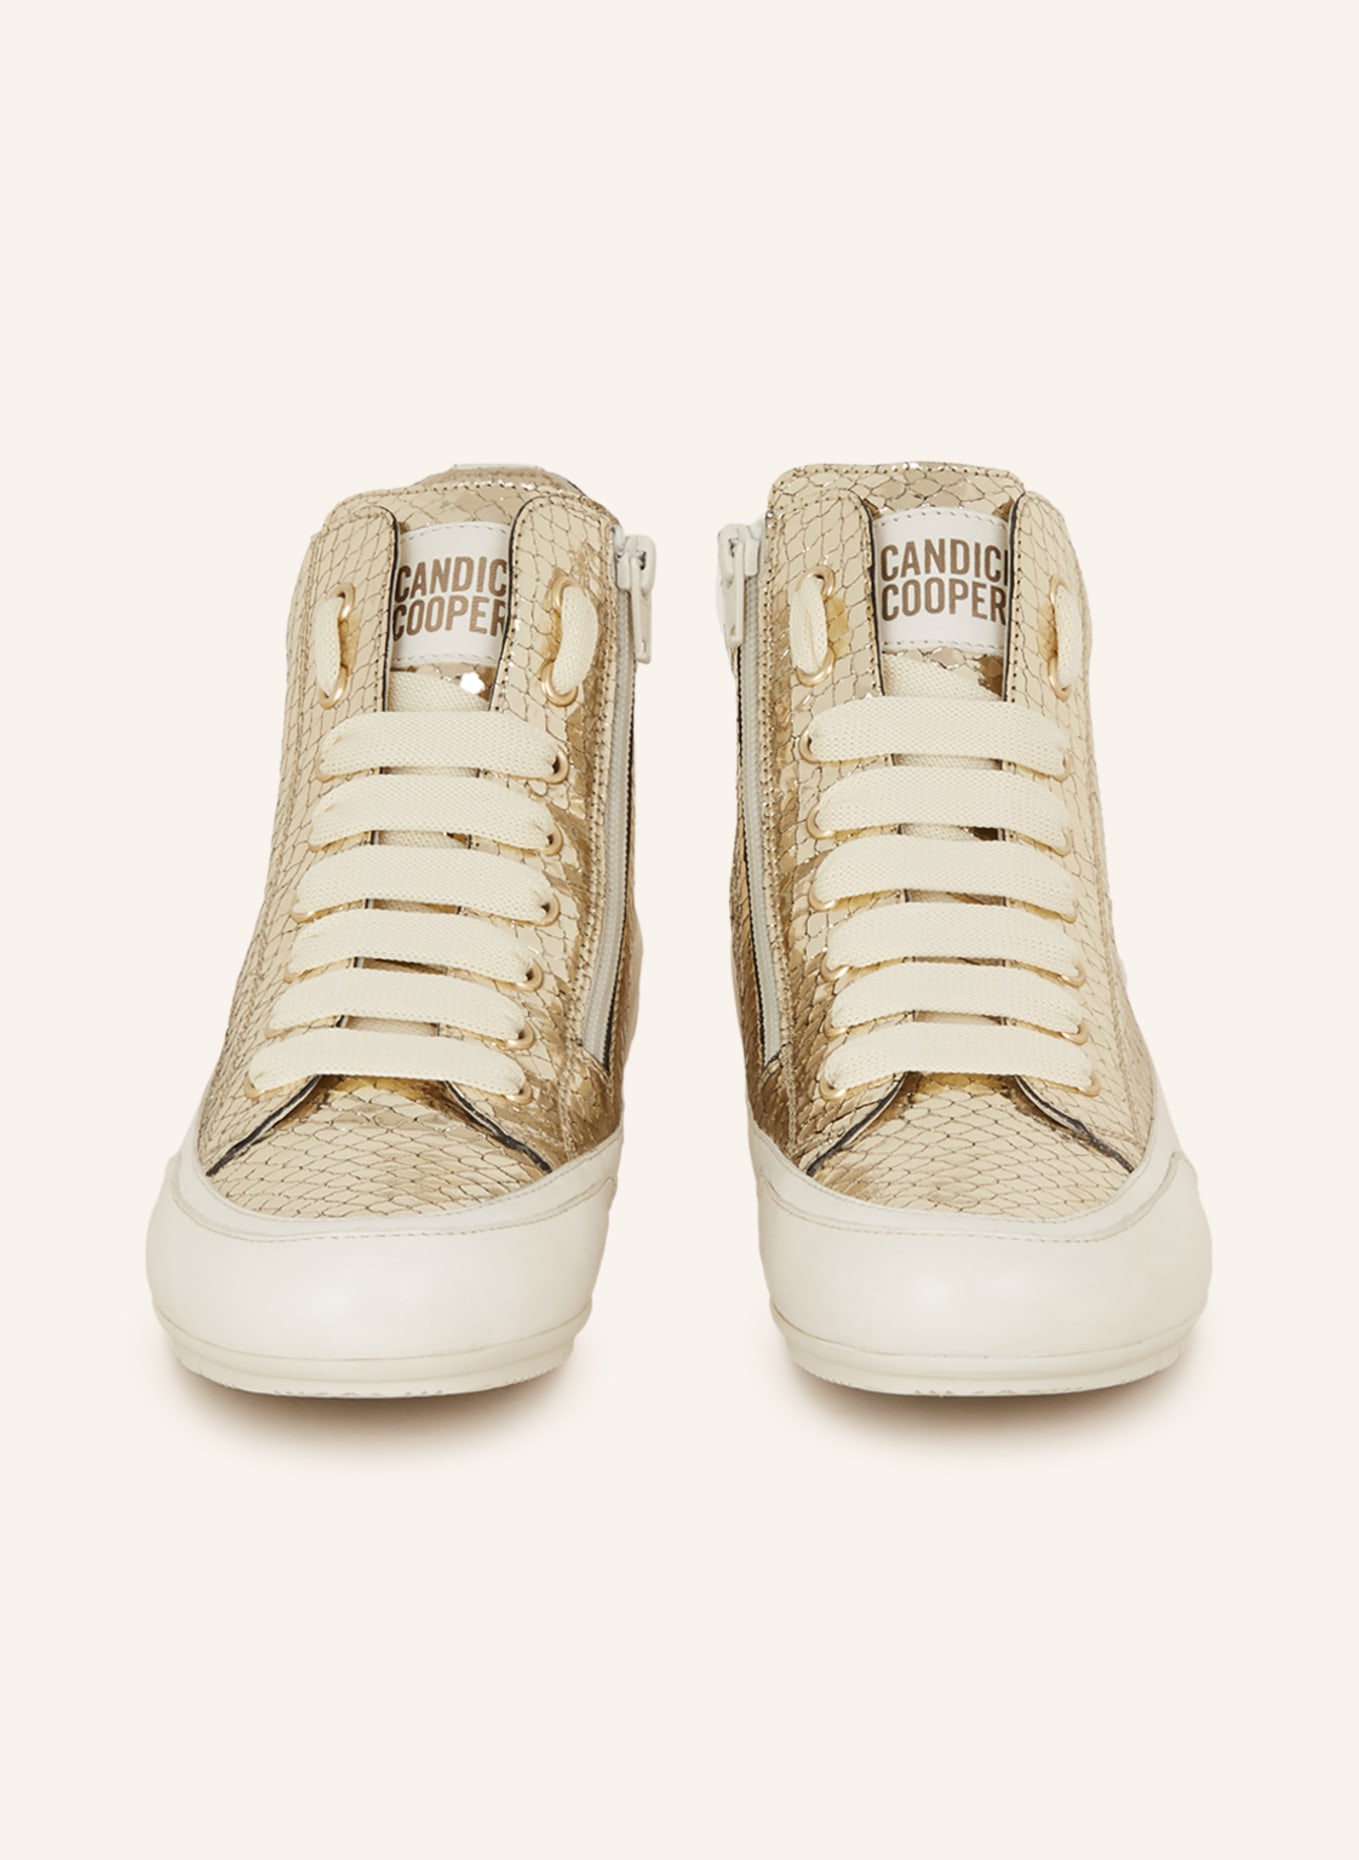 Candice Cooper Hightop-Sneaker PLUS CHIC, Farbe: GOLD (Bild 3)